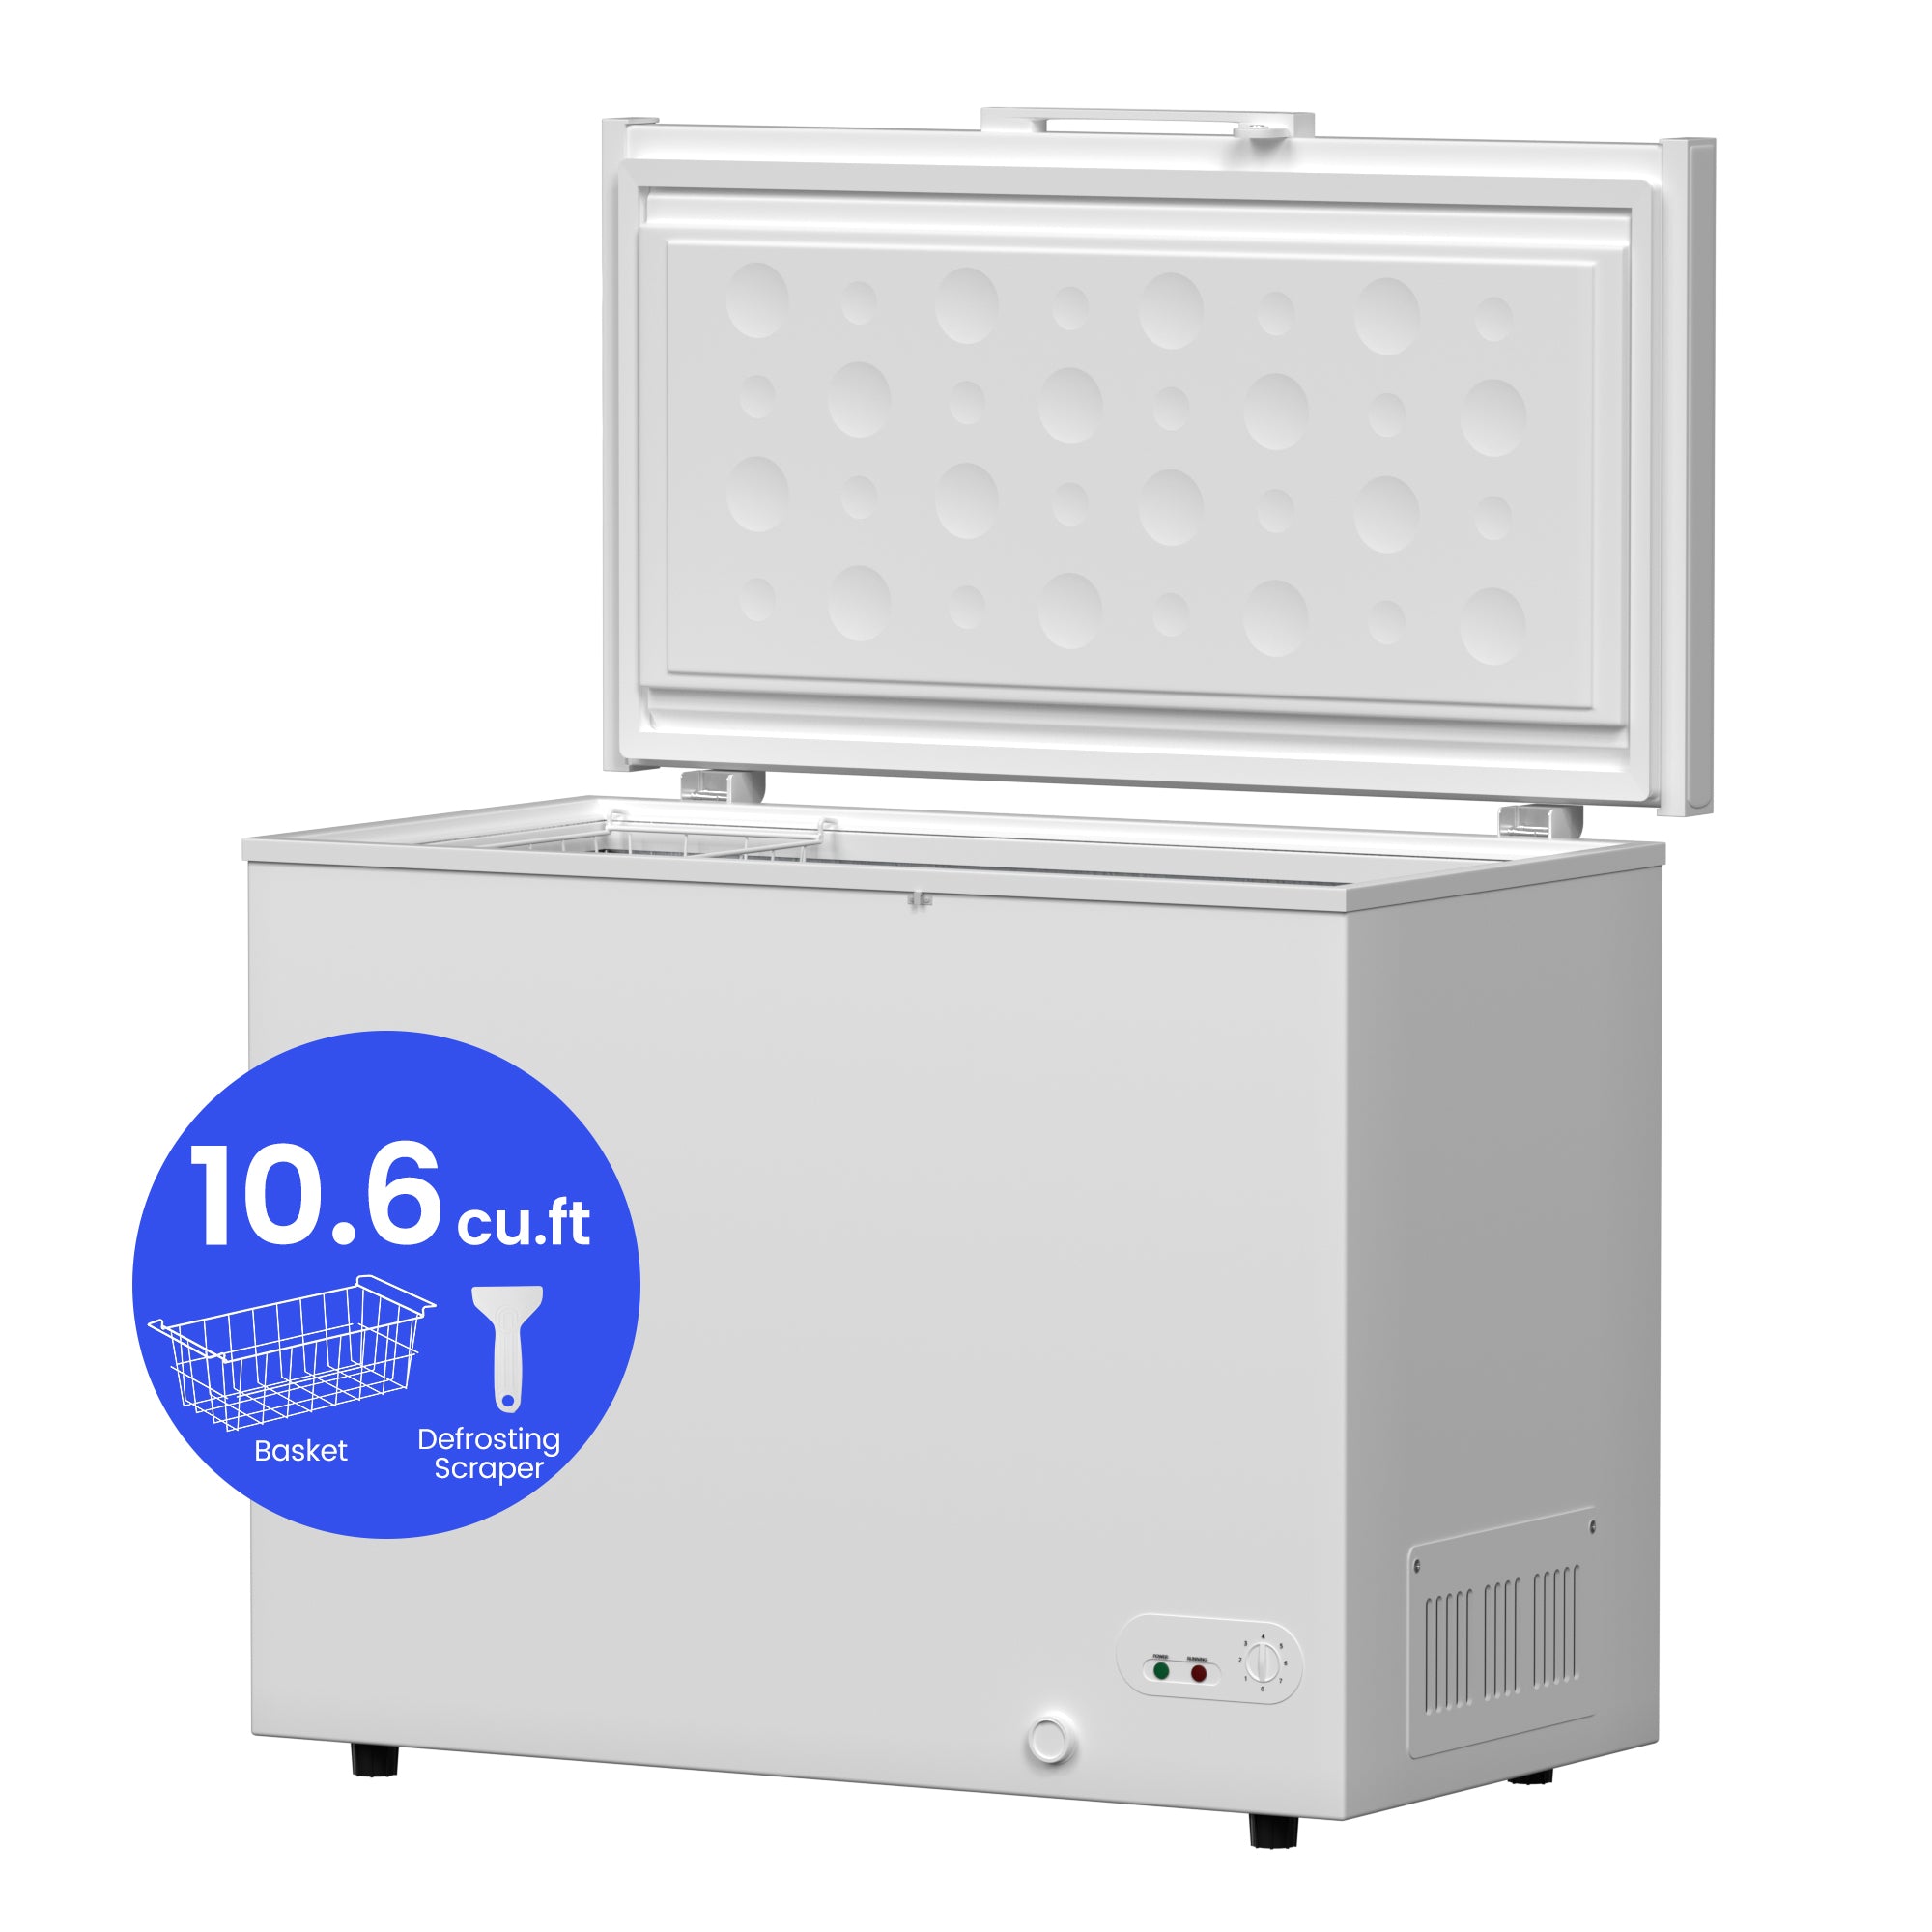 Clearance 110V Six Door Freezer N12232